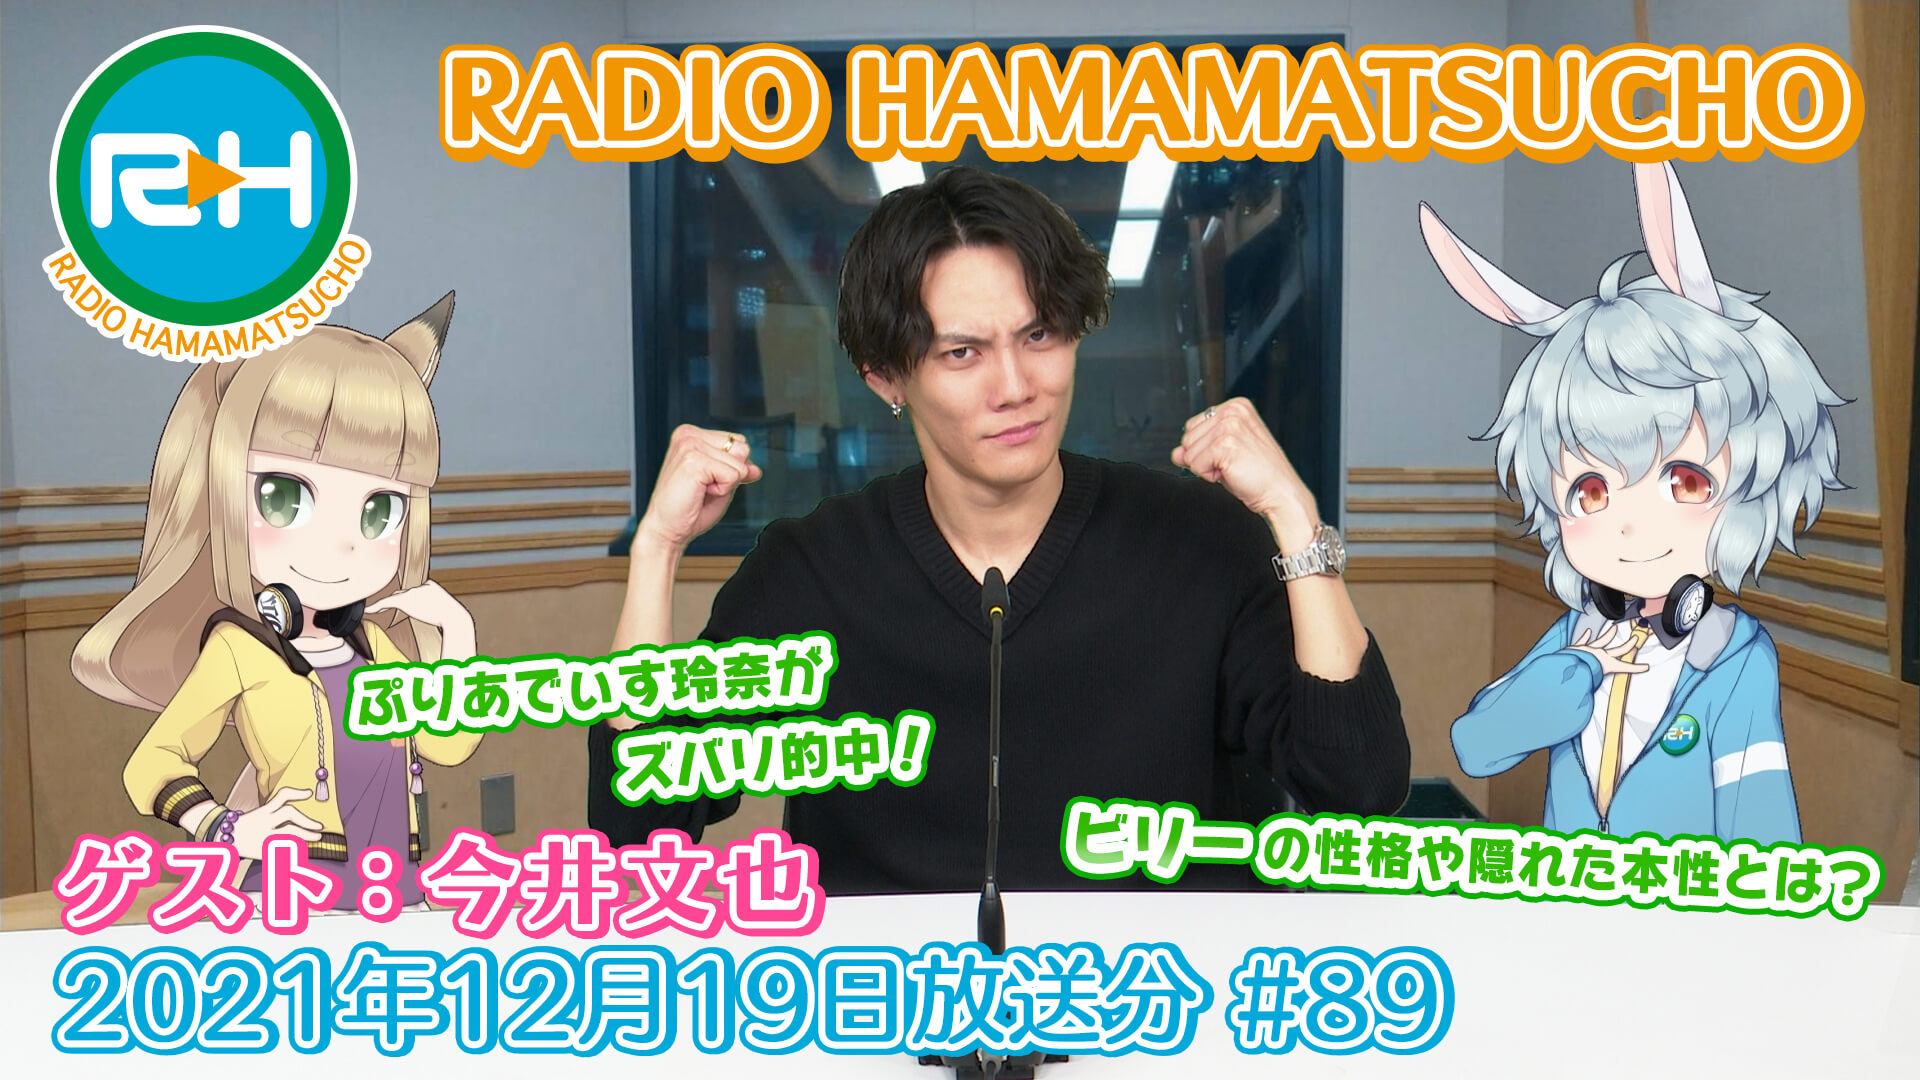 RADIO HAMAMATSUCHO 第89回 (2021年12月19日放送分) ゲスト: 今井文也